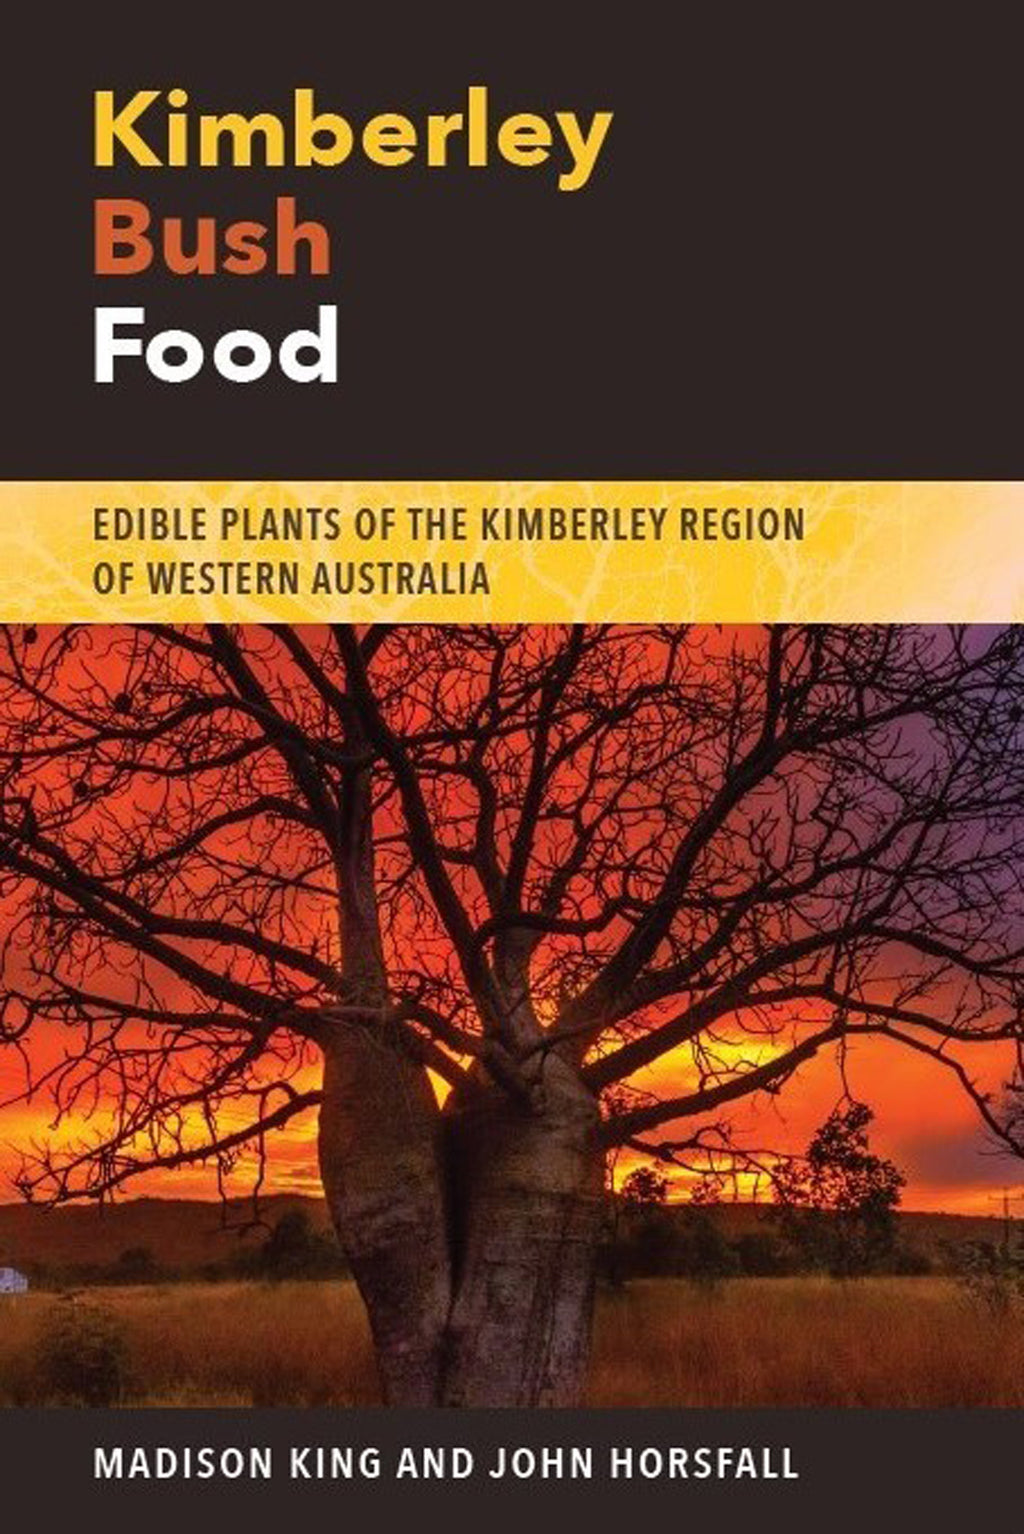 Kimberley Bush Food - Edible Plants of the Kimberley Region of Western Australia